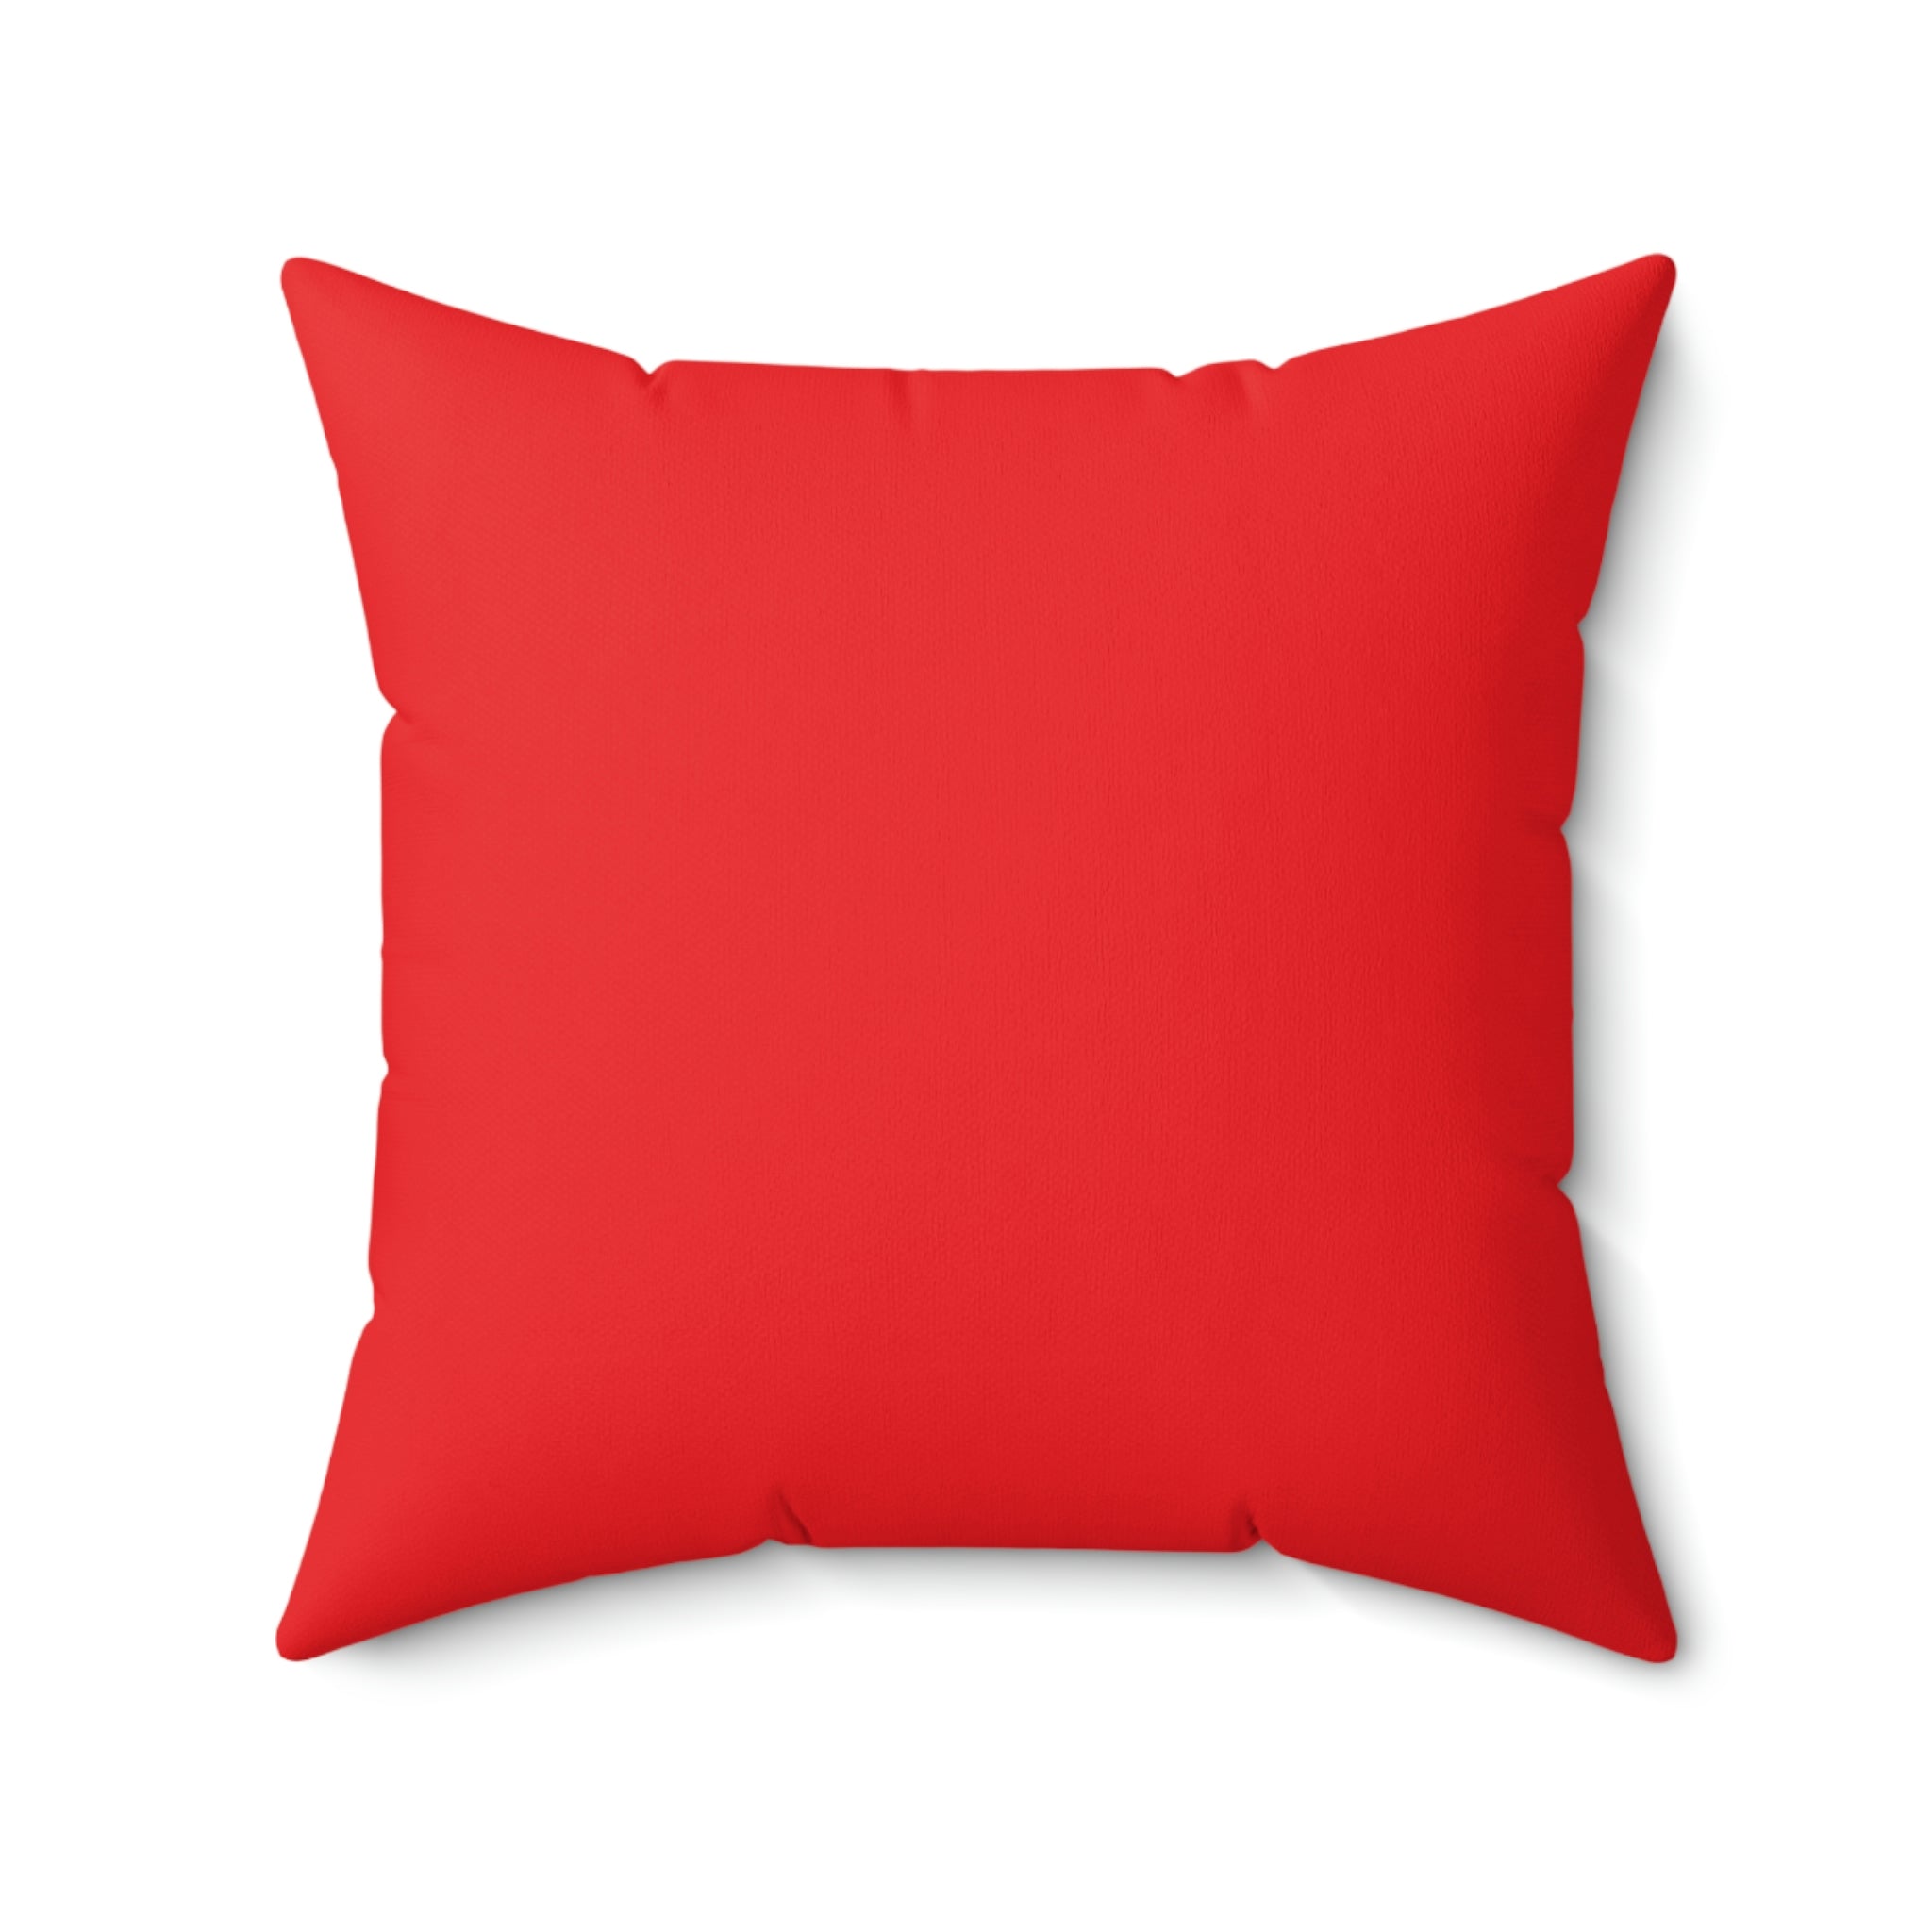 Love Spun Polyester Pillow red heart pattern